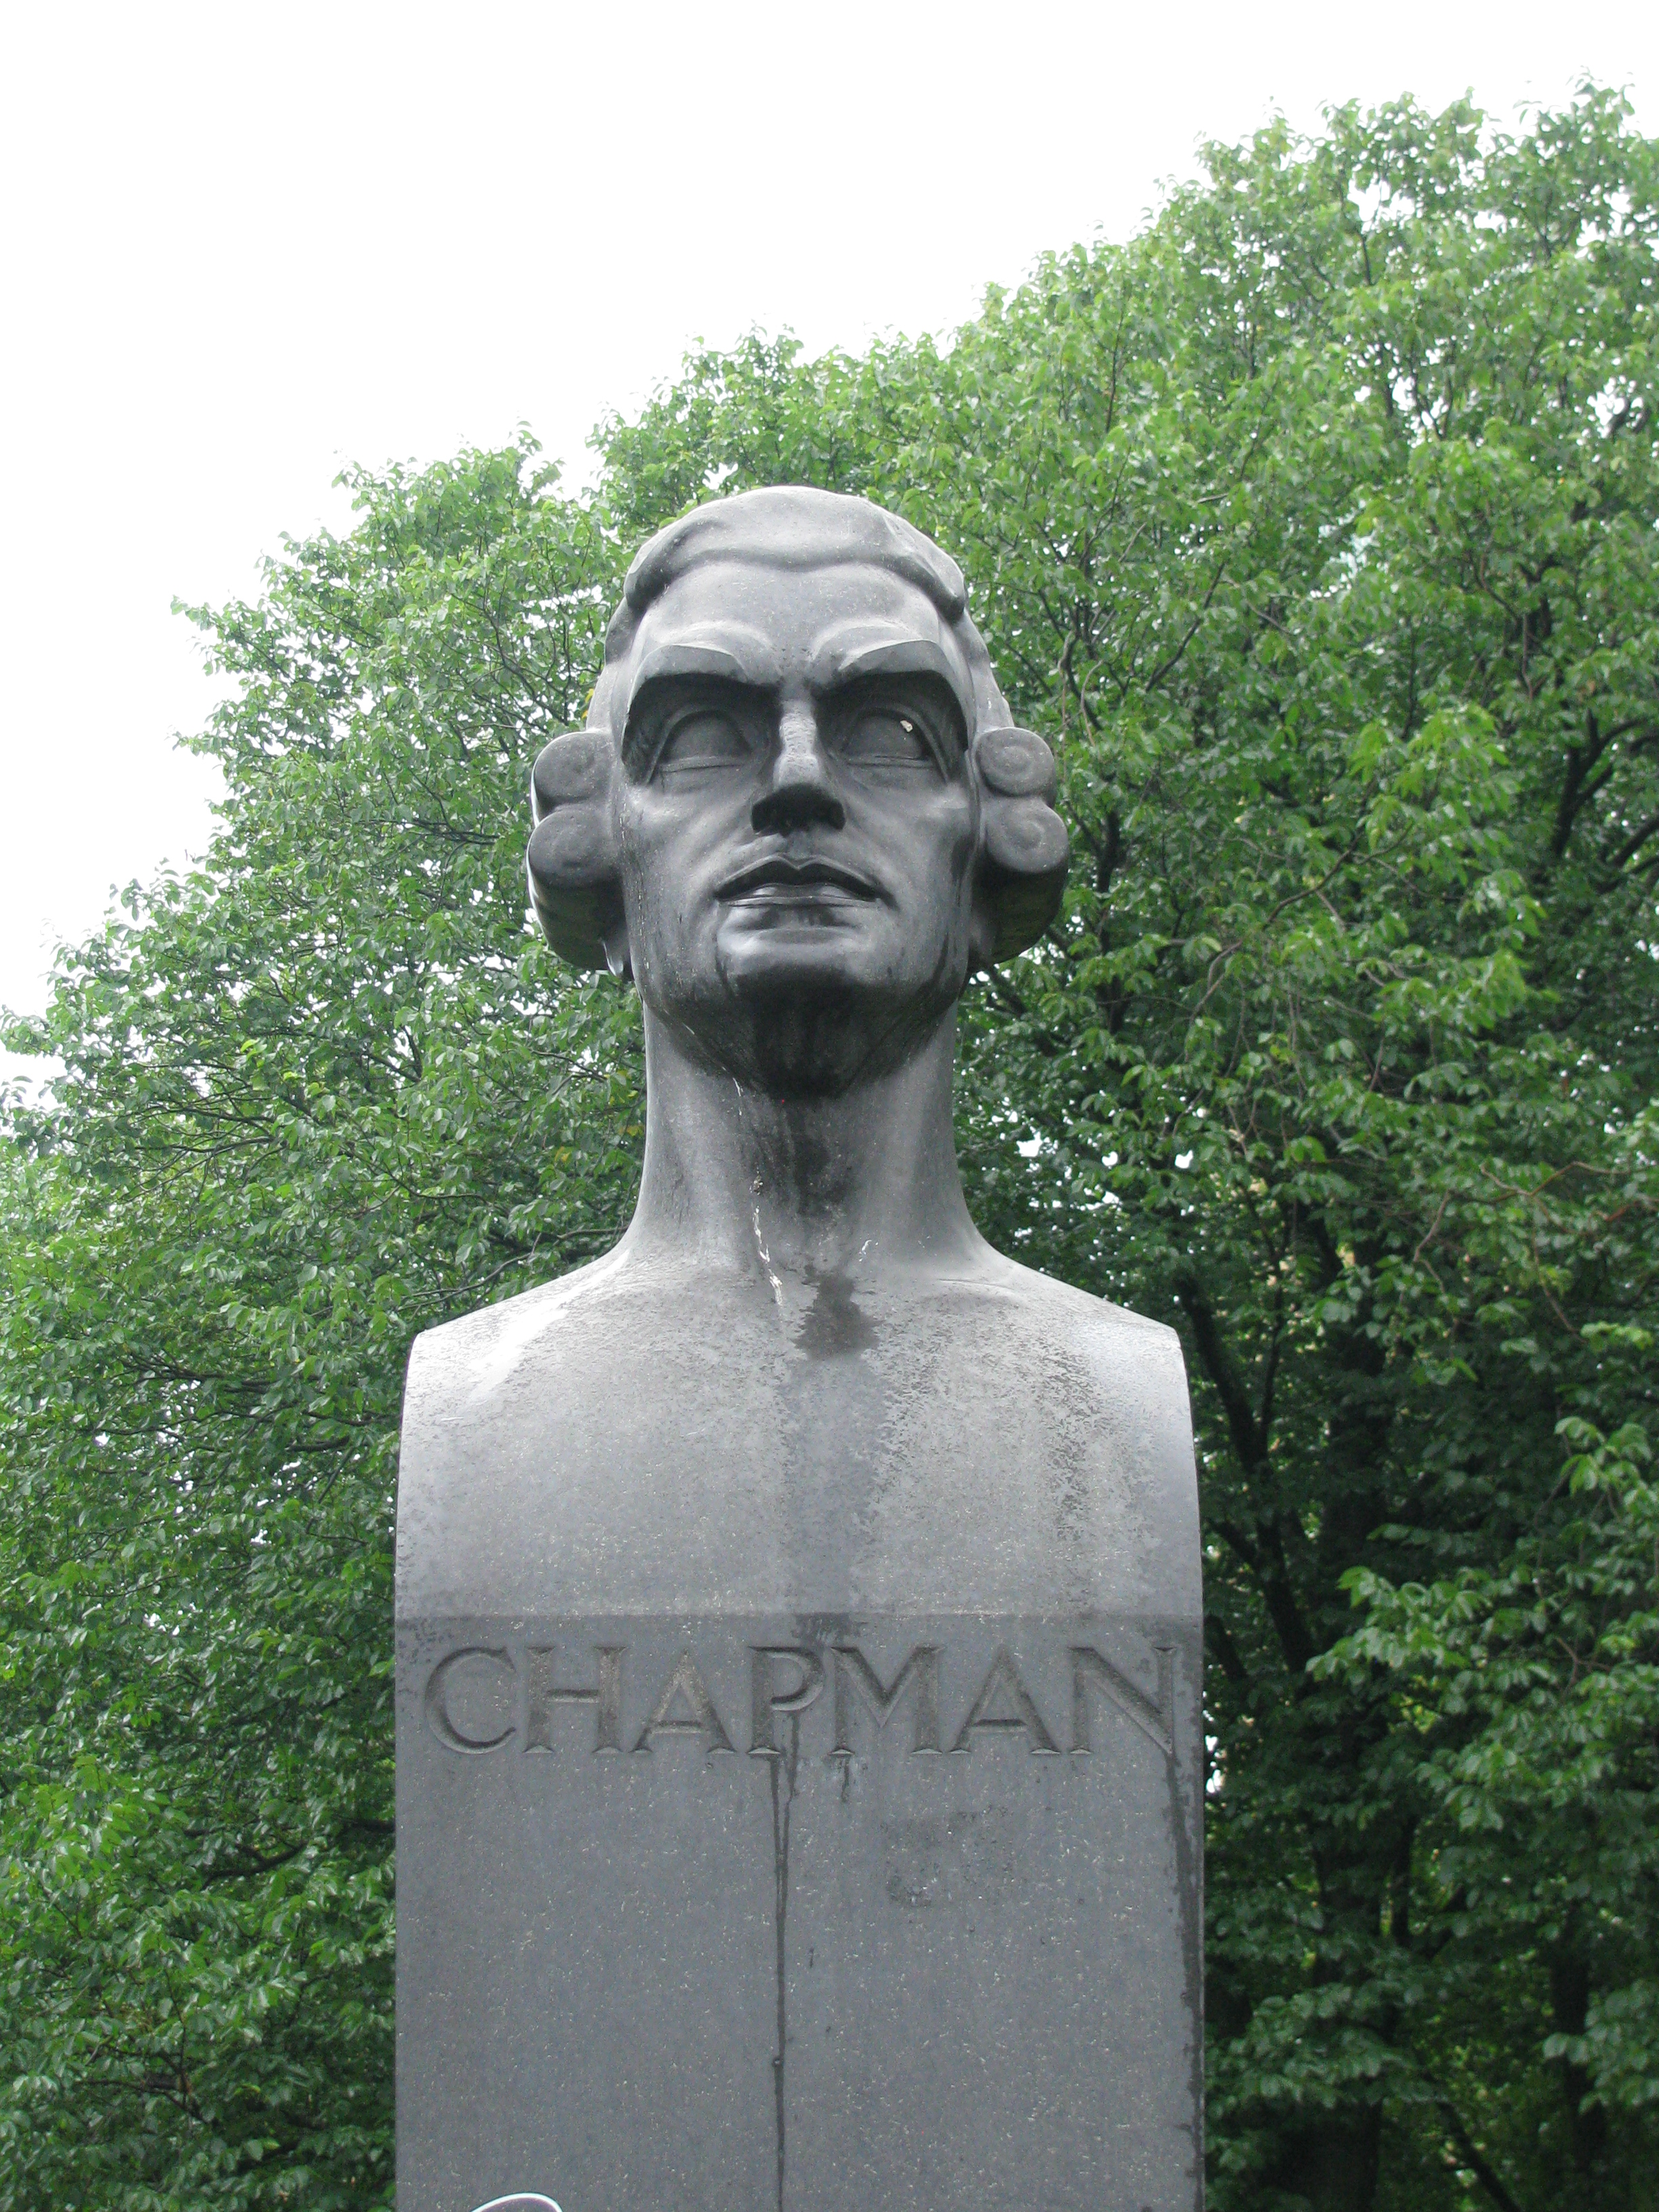 https://upload.wikimedia.org/wikipedia/commons/3/38/Statue_of_F.H._af_Chapman.jpg